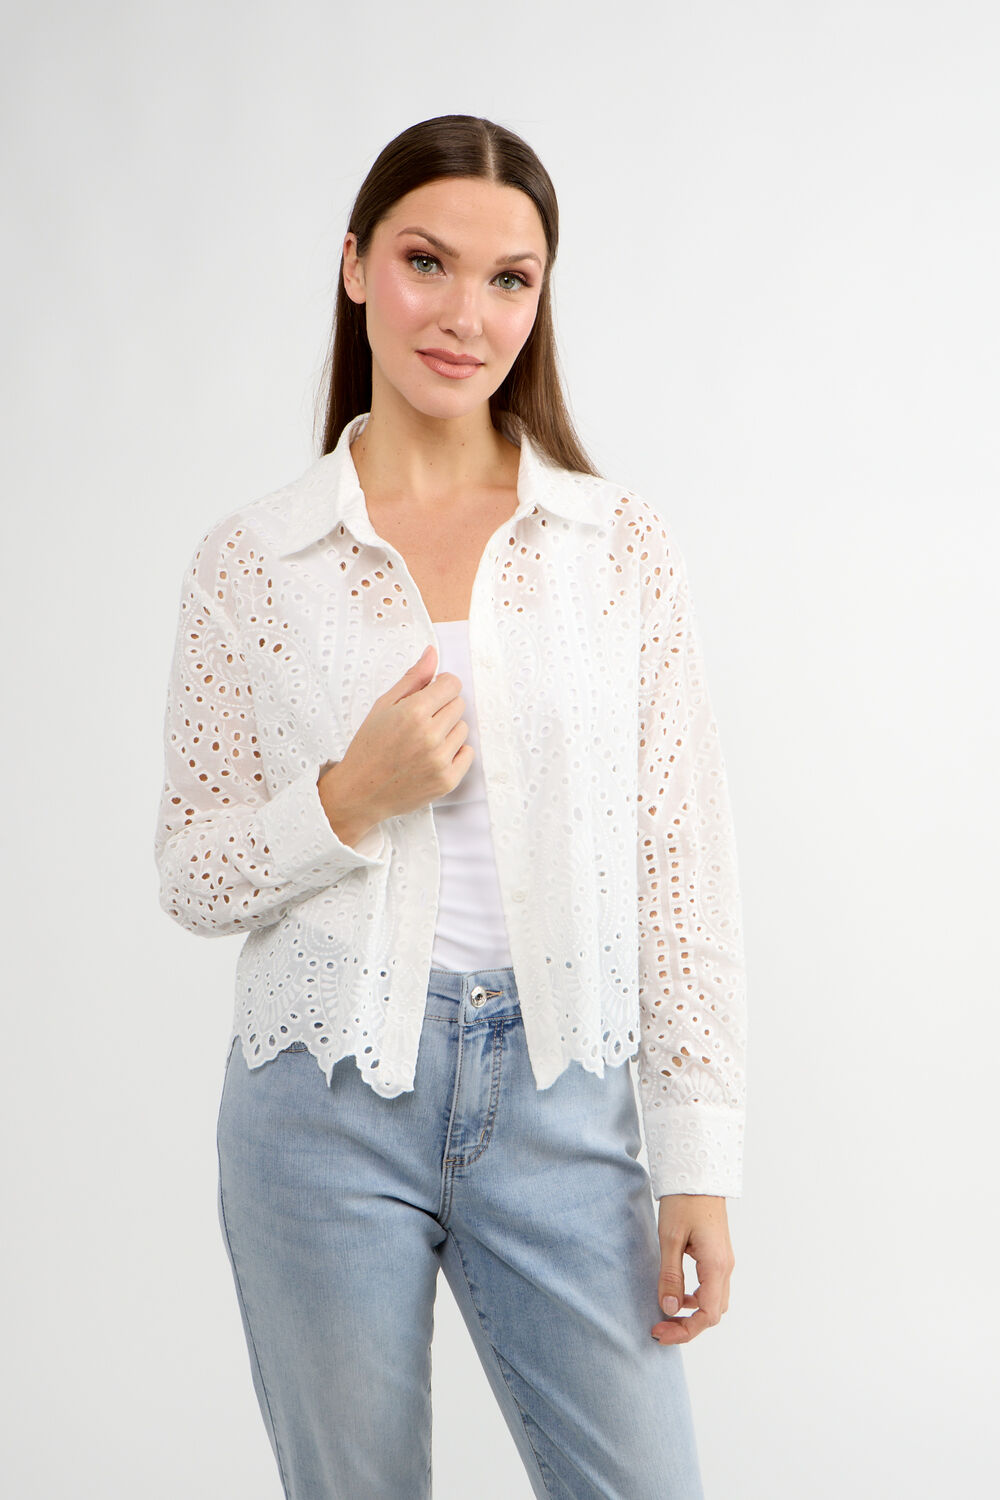 Brocade Cutaway Minimalist Shirt Style 81001-T6918. White